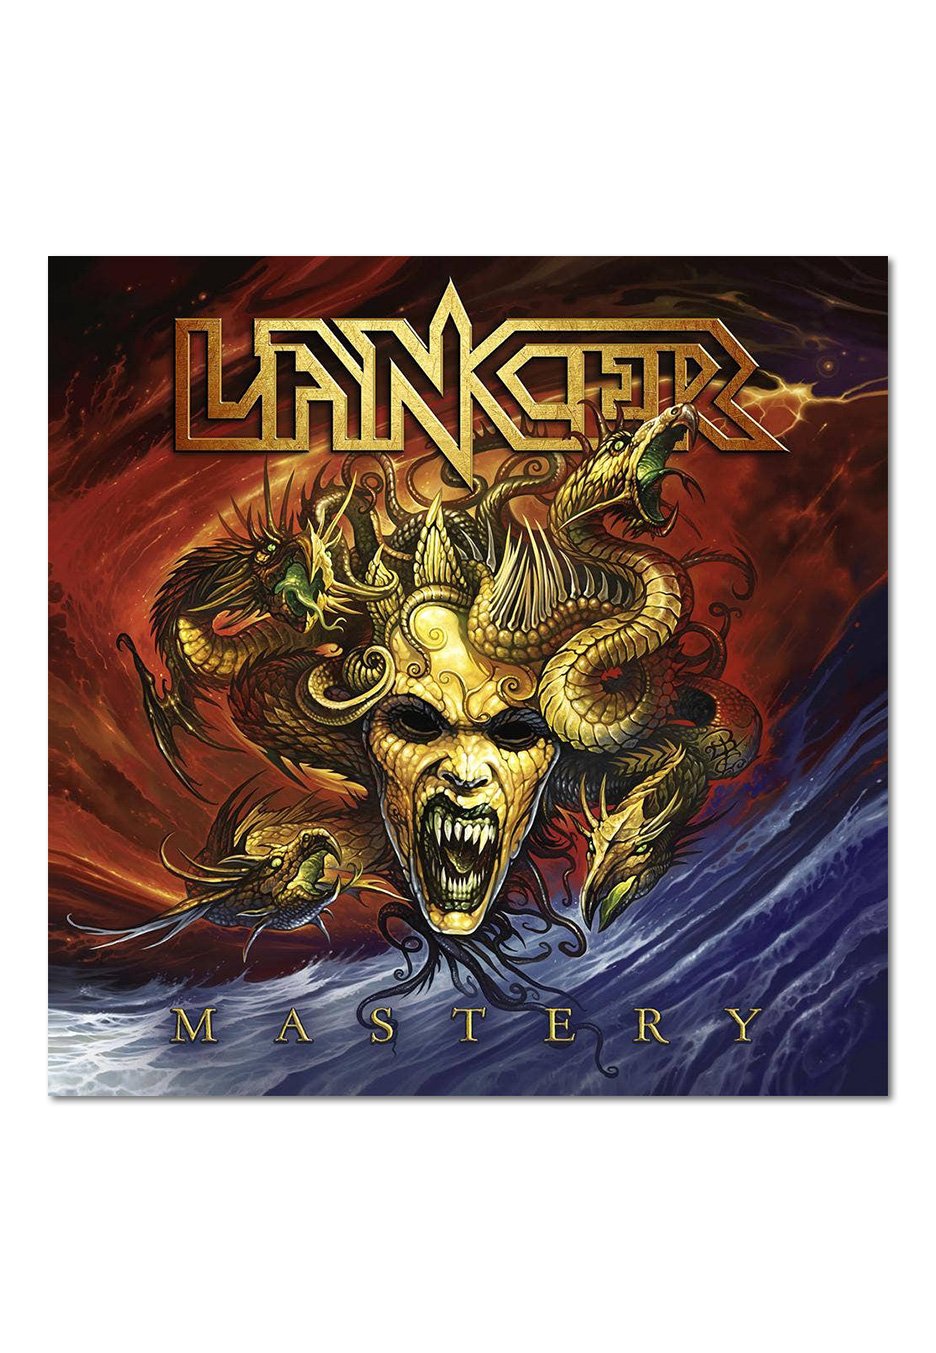 Lancer - Mastery - Digipak CD